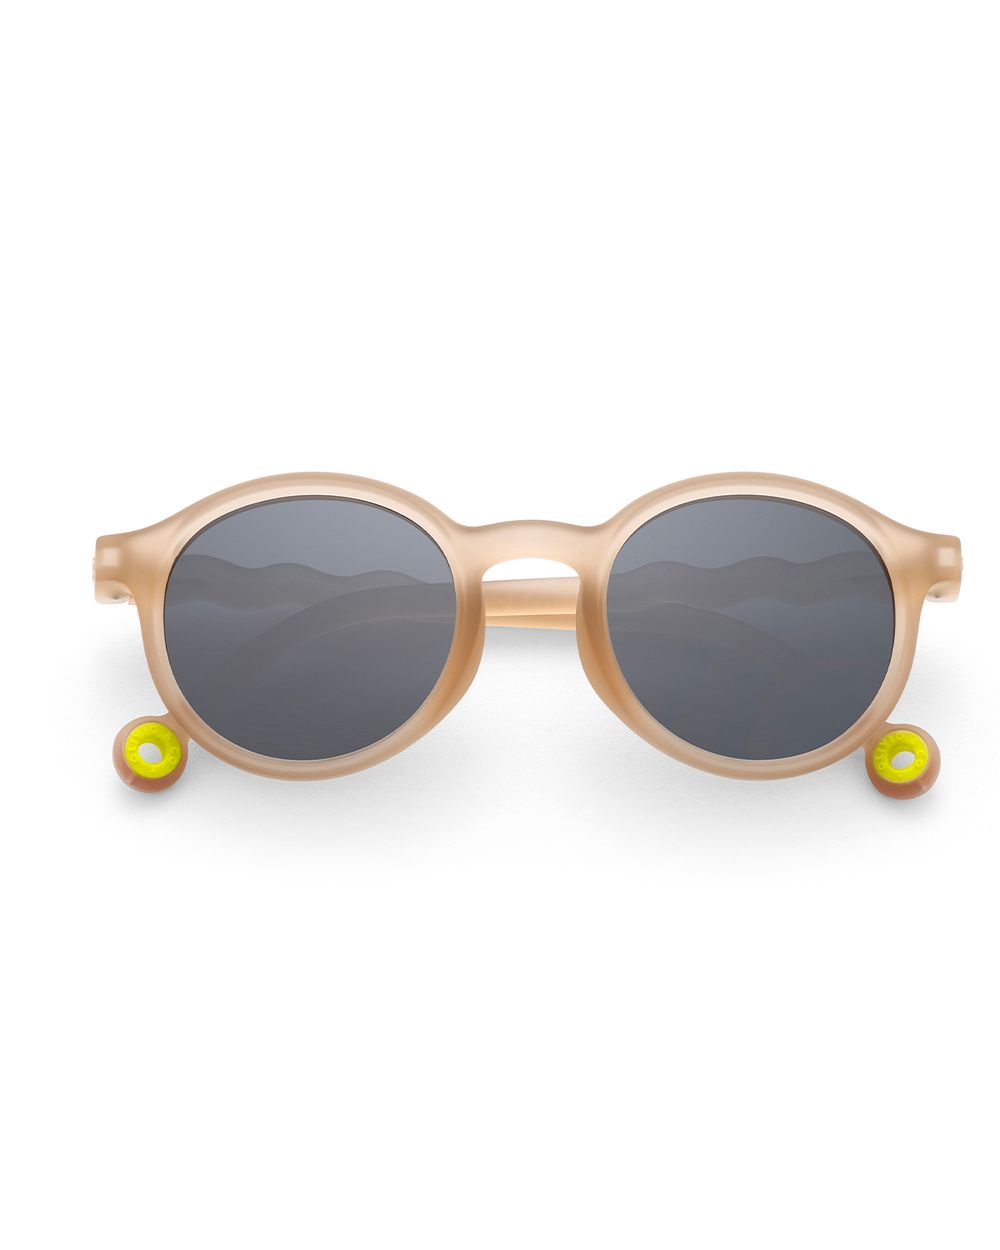 Junior Oval Sunglasses Sand Beige with Polarized Lenses